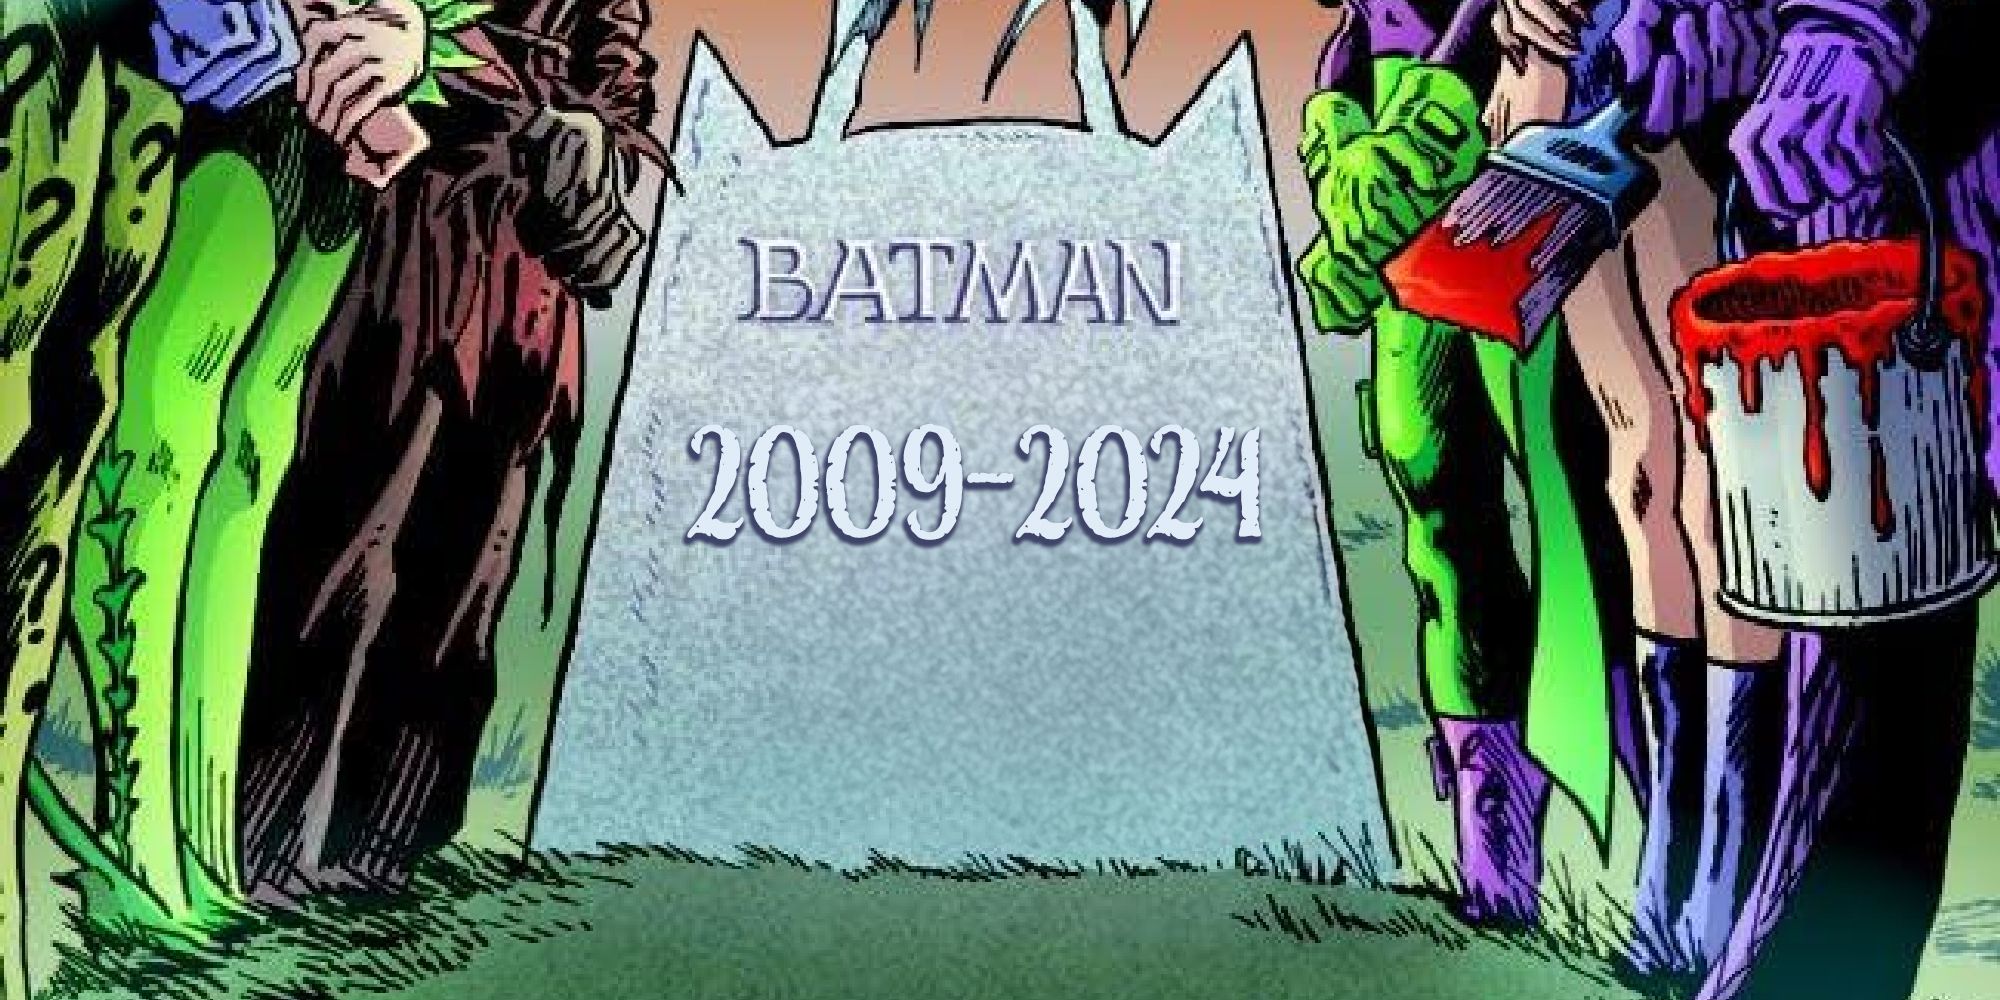 Batman grave changed to Arkham dates